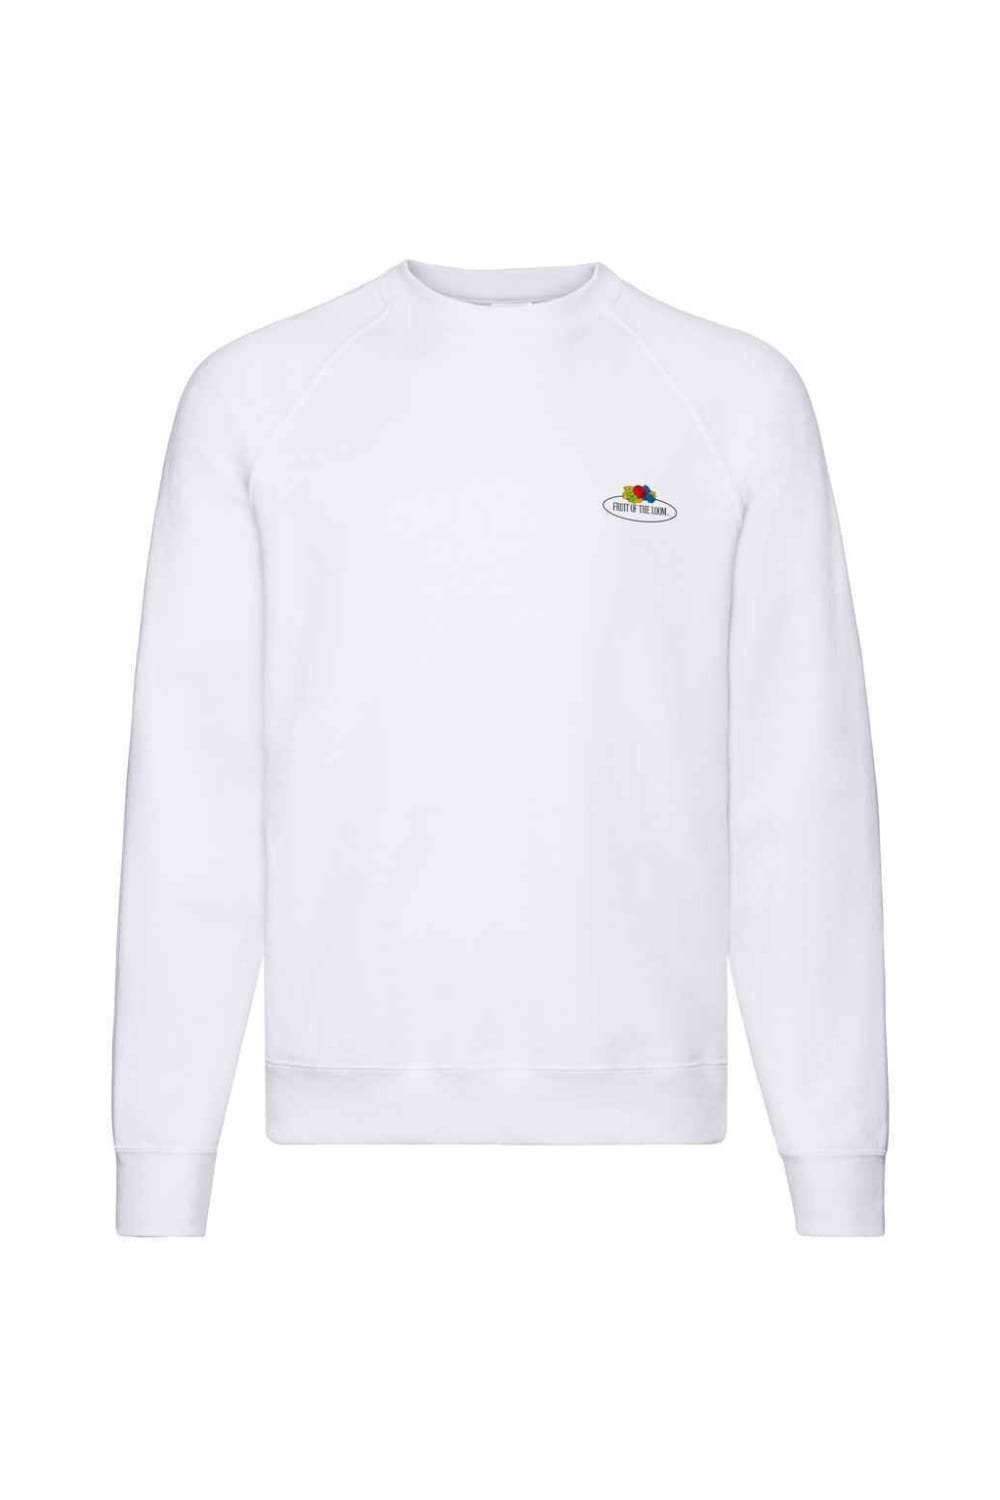 Fruit of the Loom Mens Vintage Small Logo Printed Raglan Sweatshirt (White)